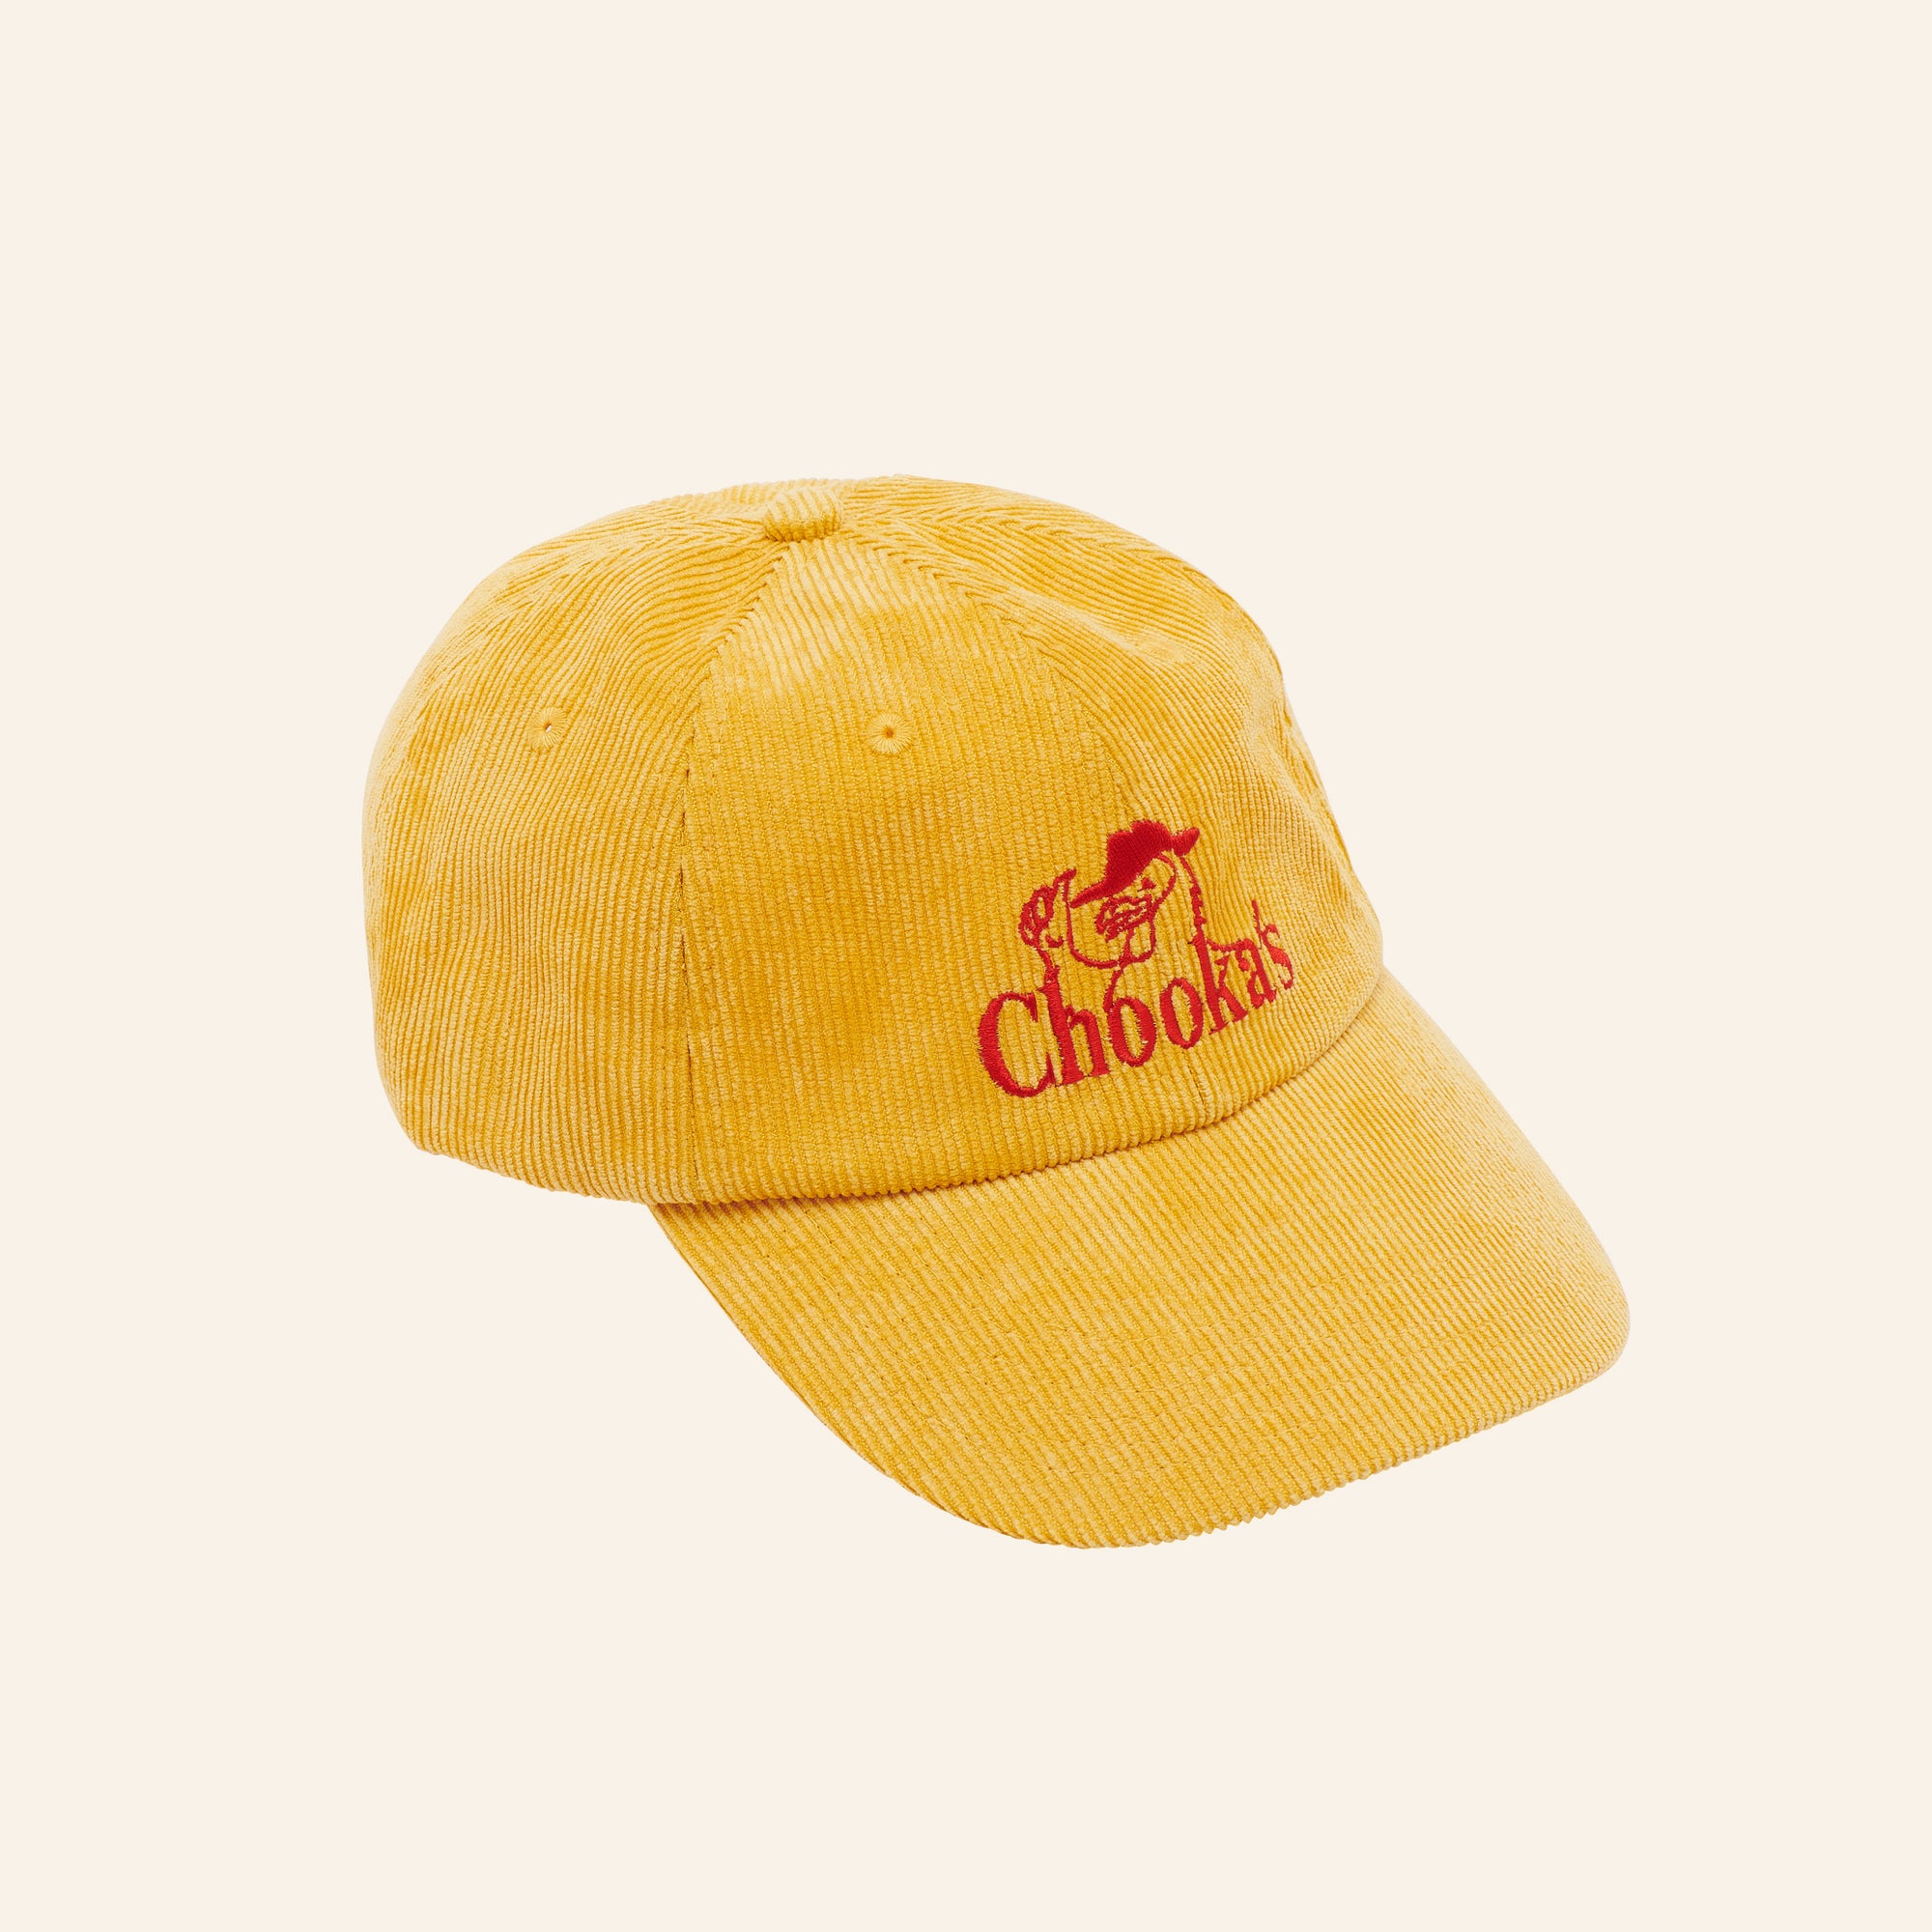 Chooka's Cord Cap